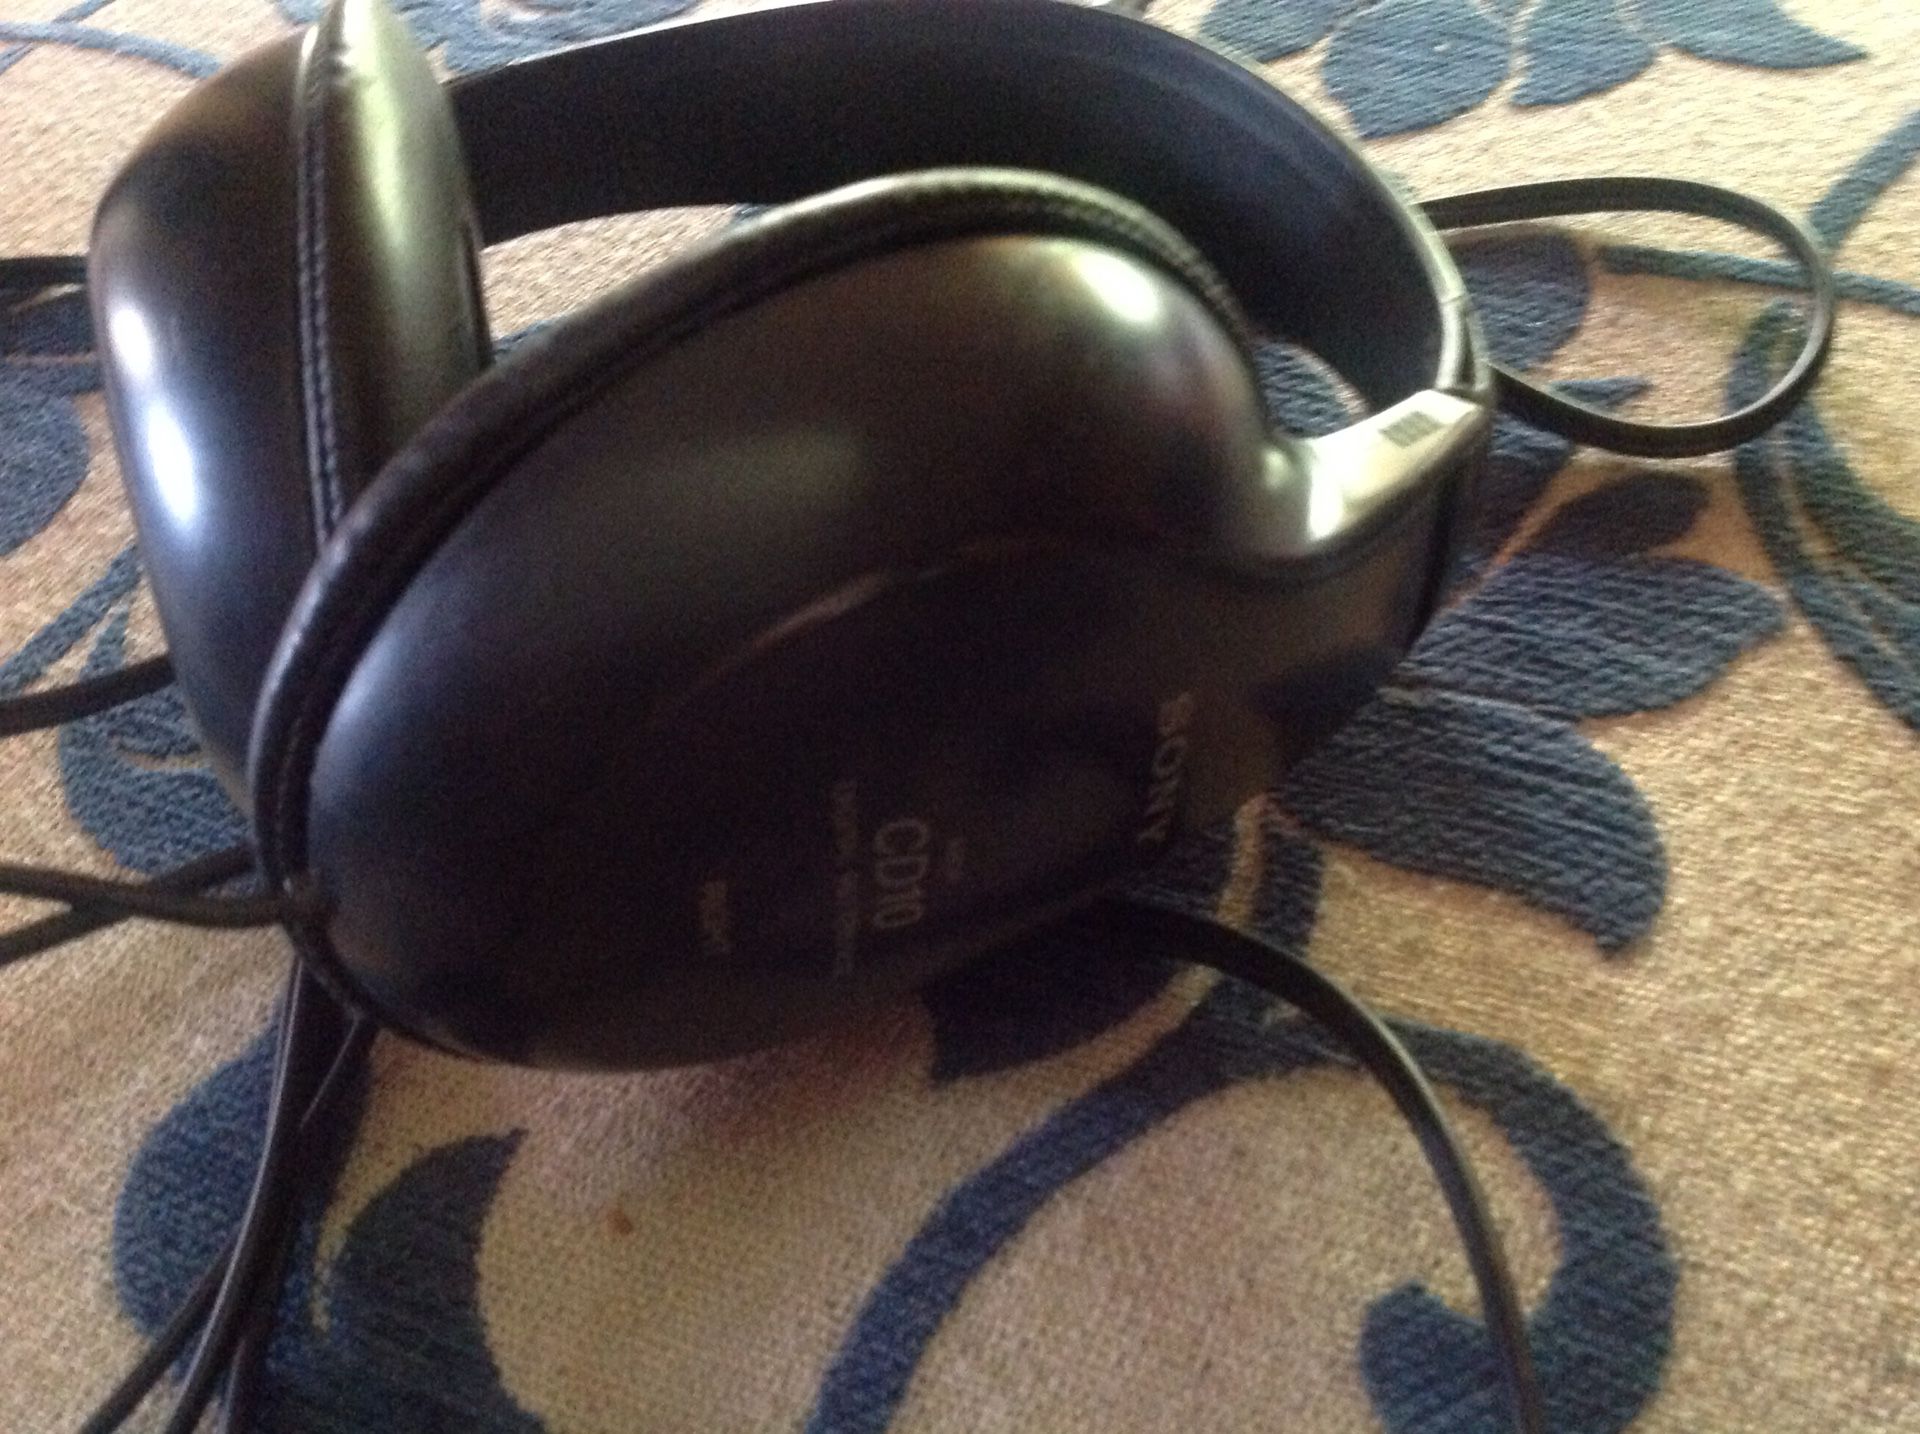 Sony MDR CD10 Headphones